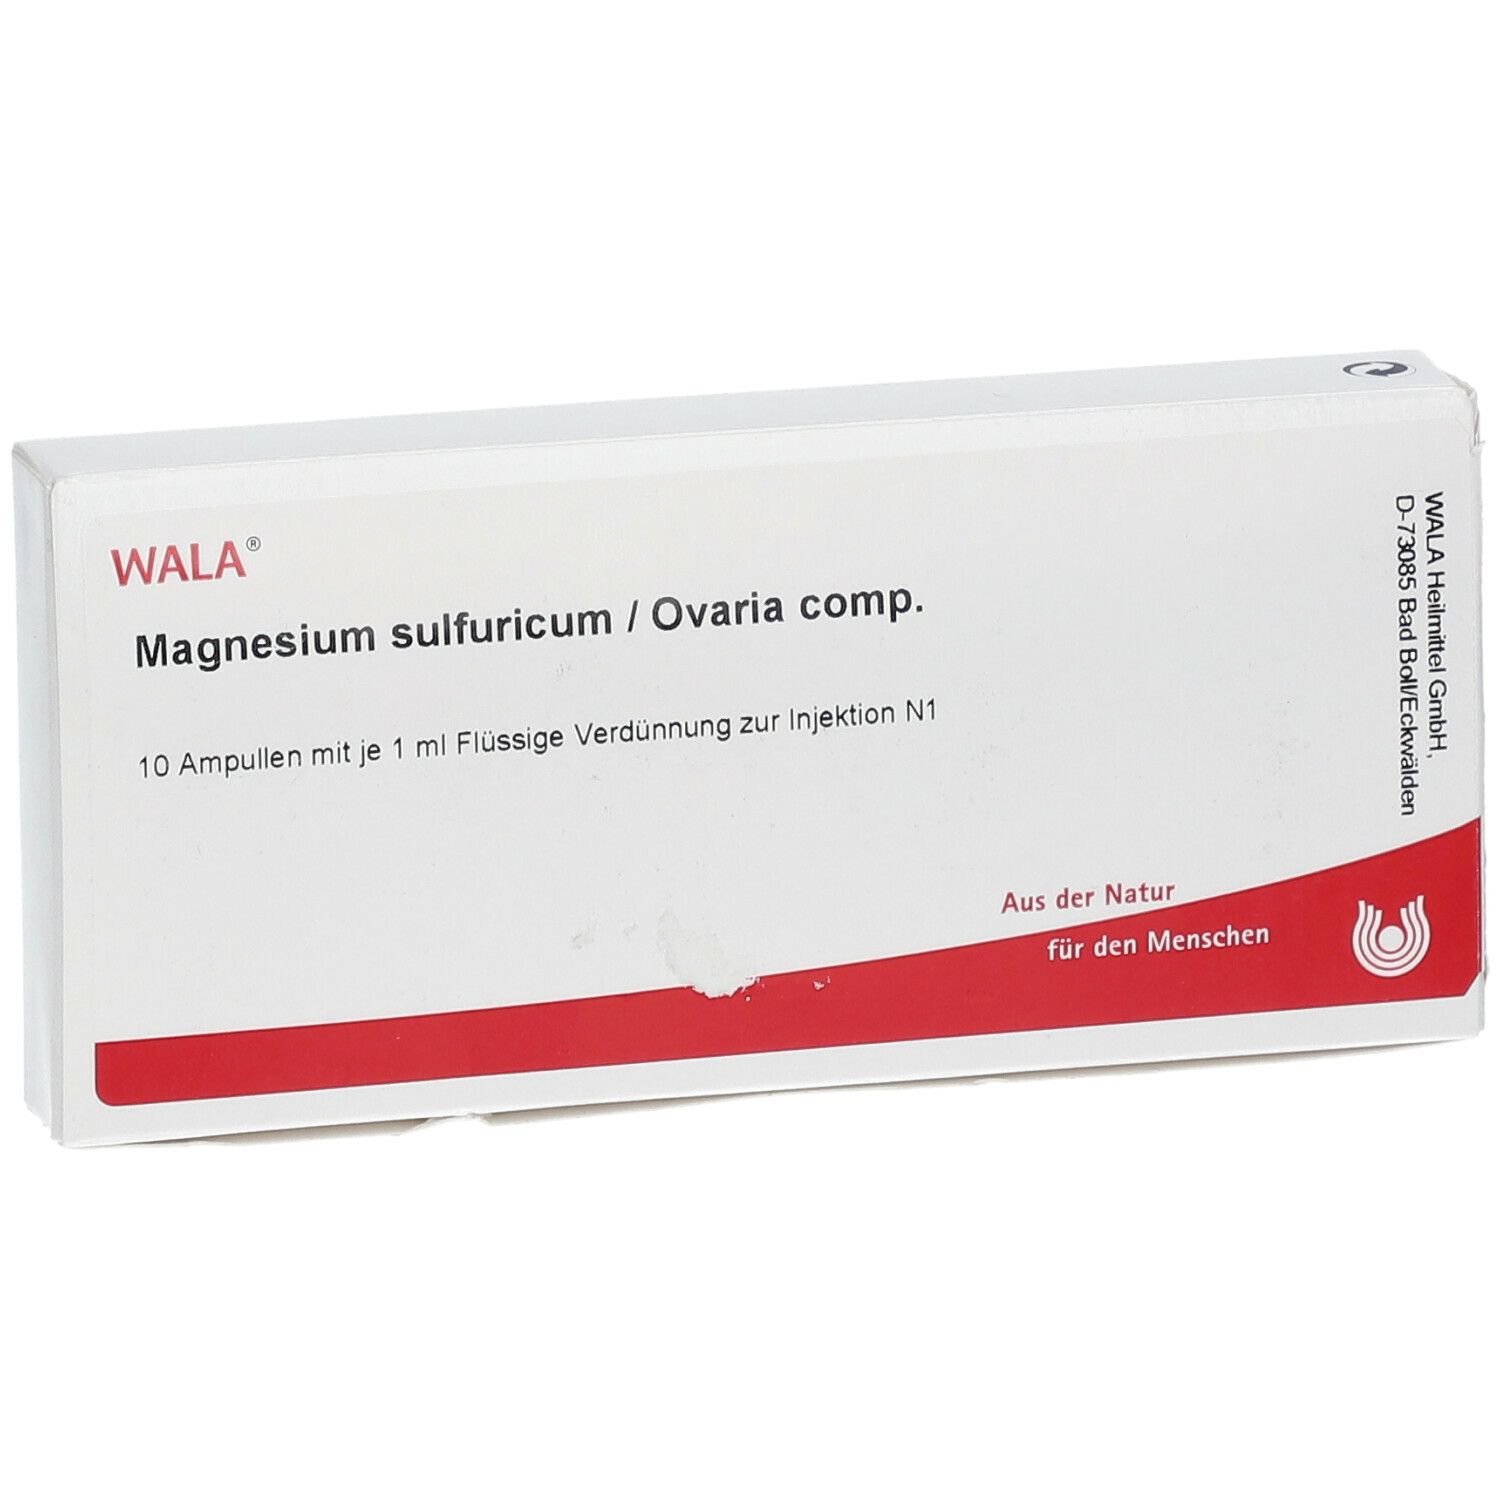 WALA® Magnesium SULFURICUM/ Ovaria Comp. Ampullen